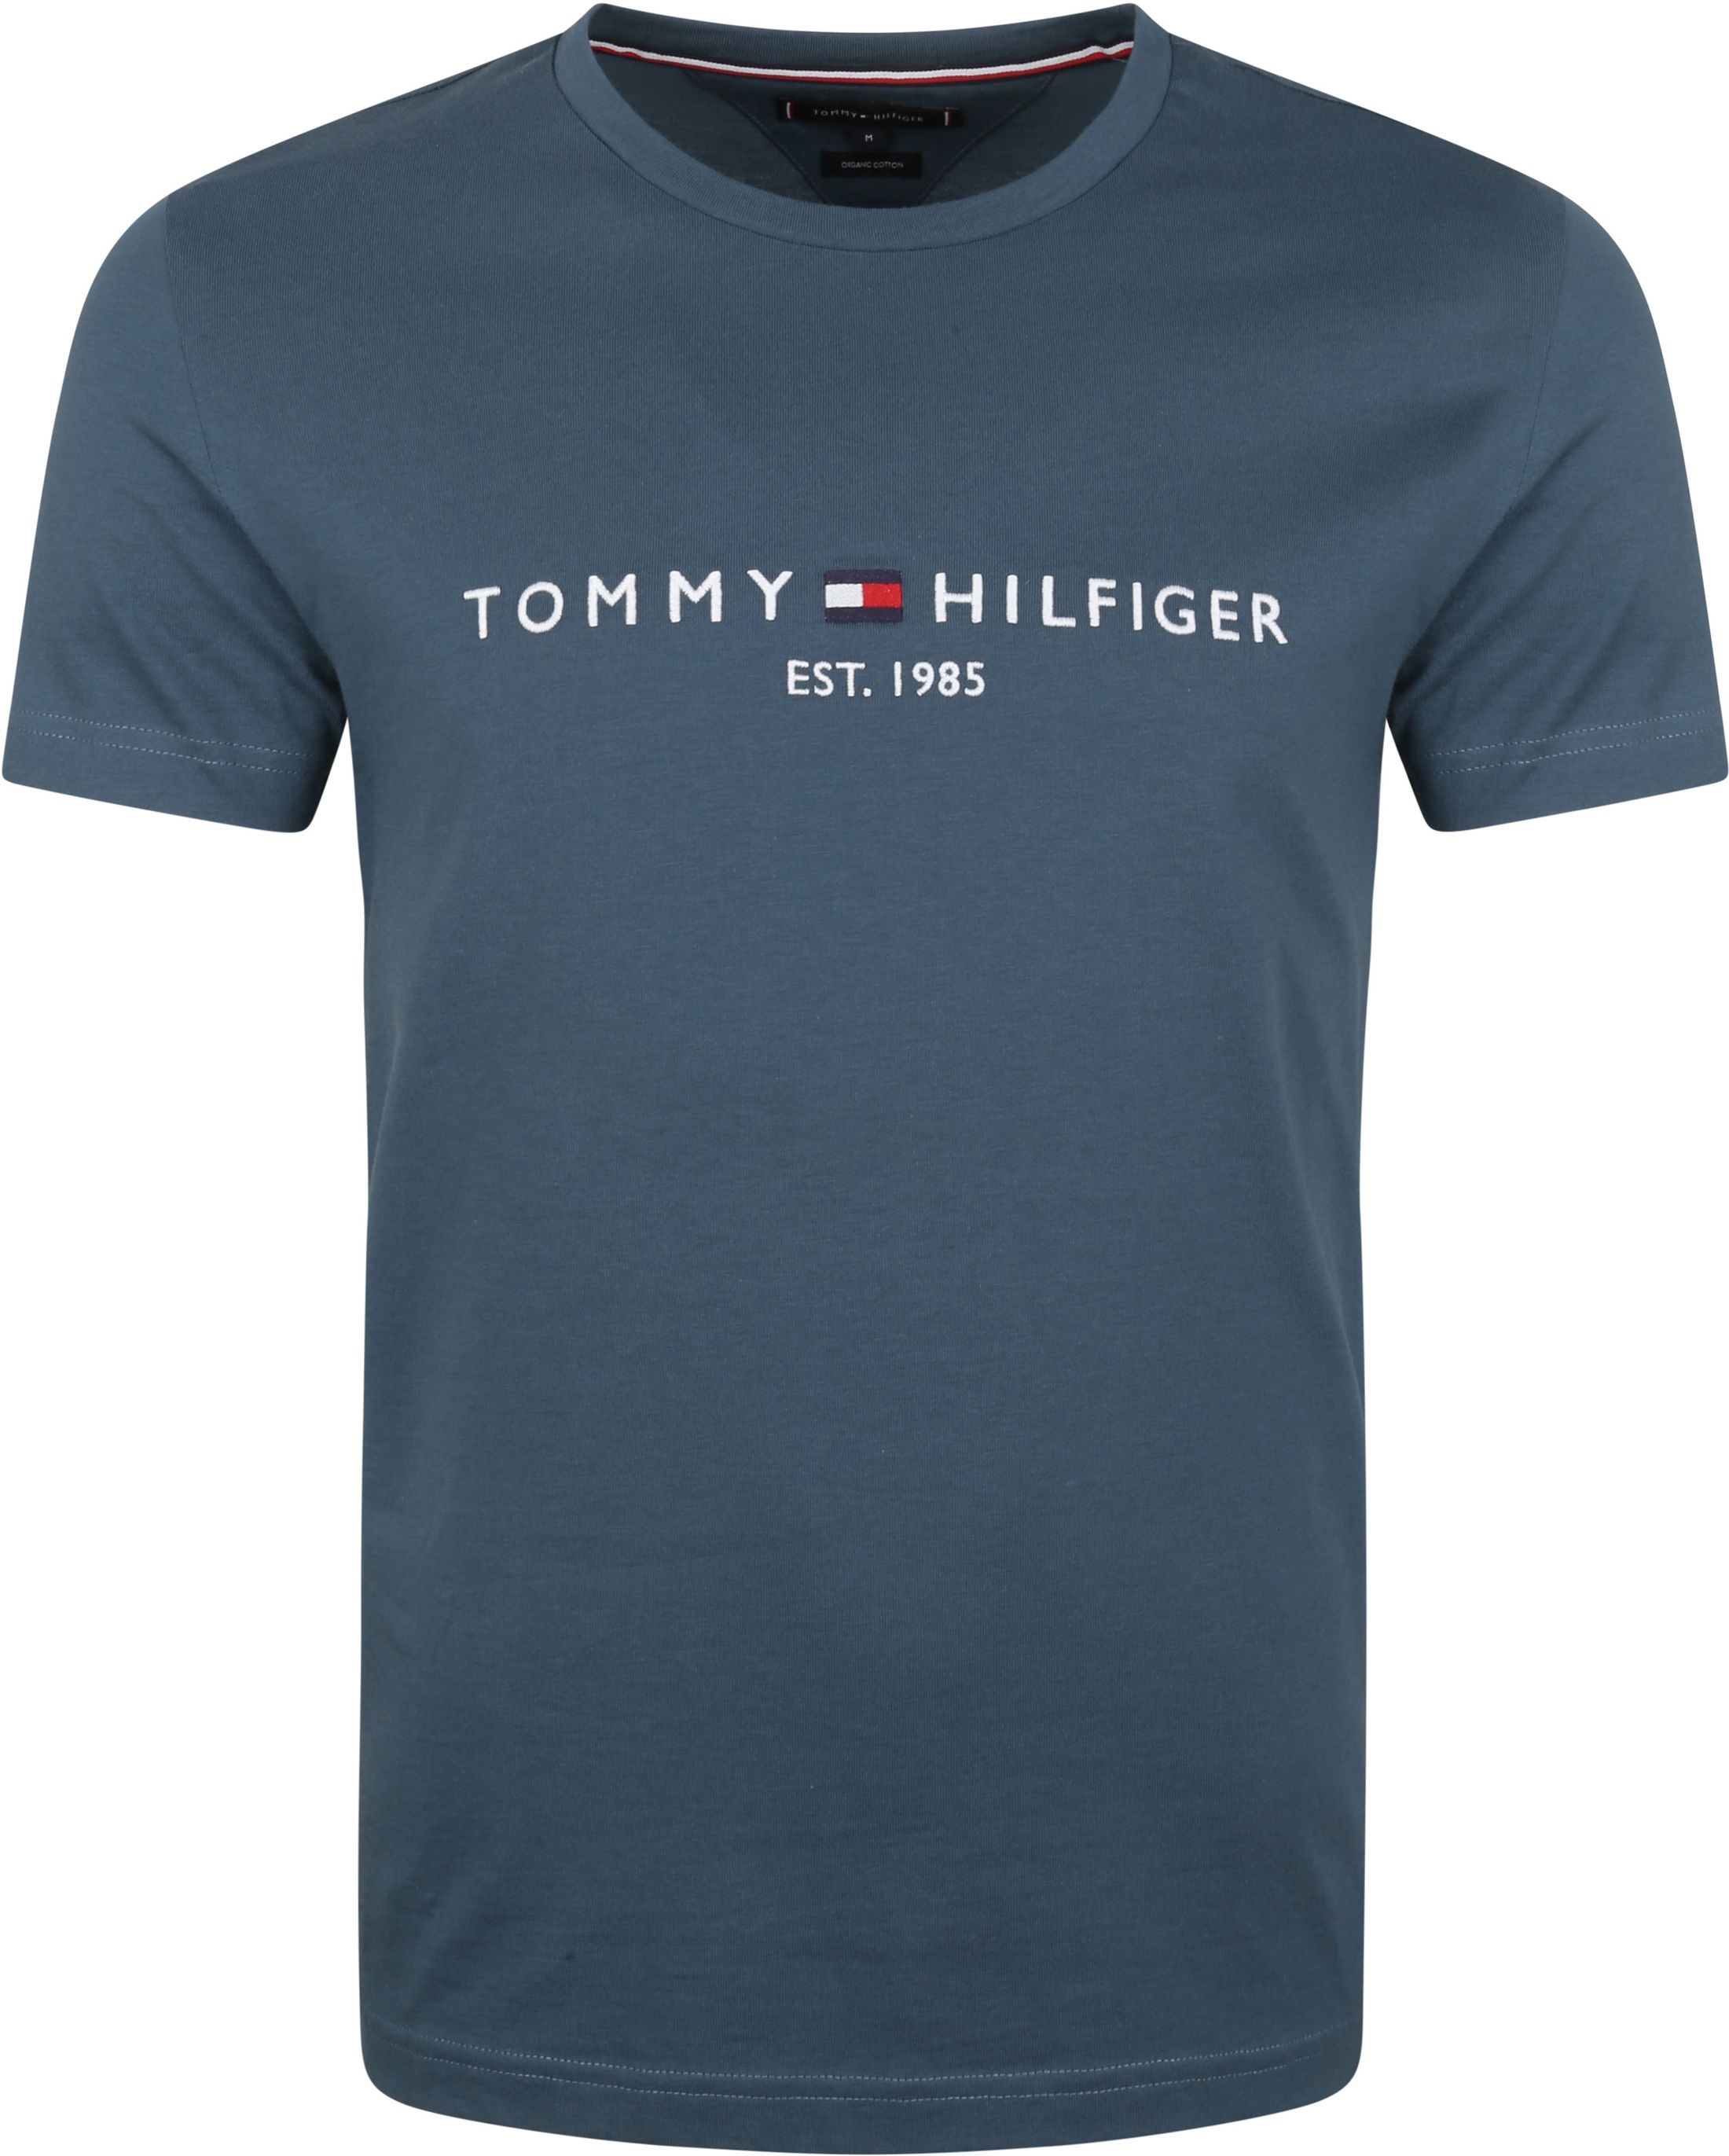 Tommy Hilfiger Logo T Shirt Gray Blue Dark Blue size L